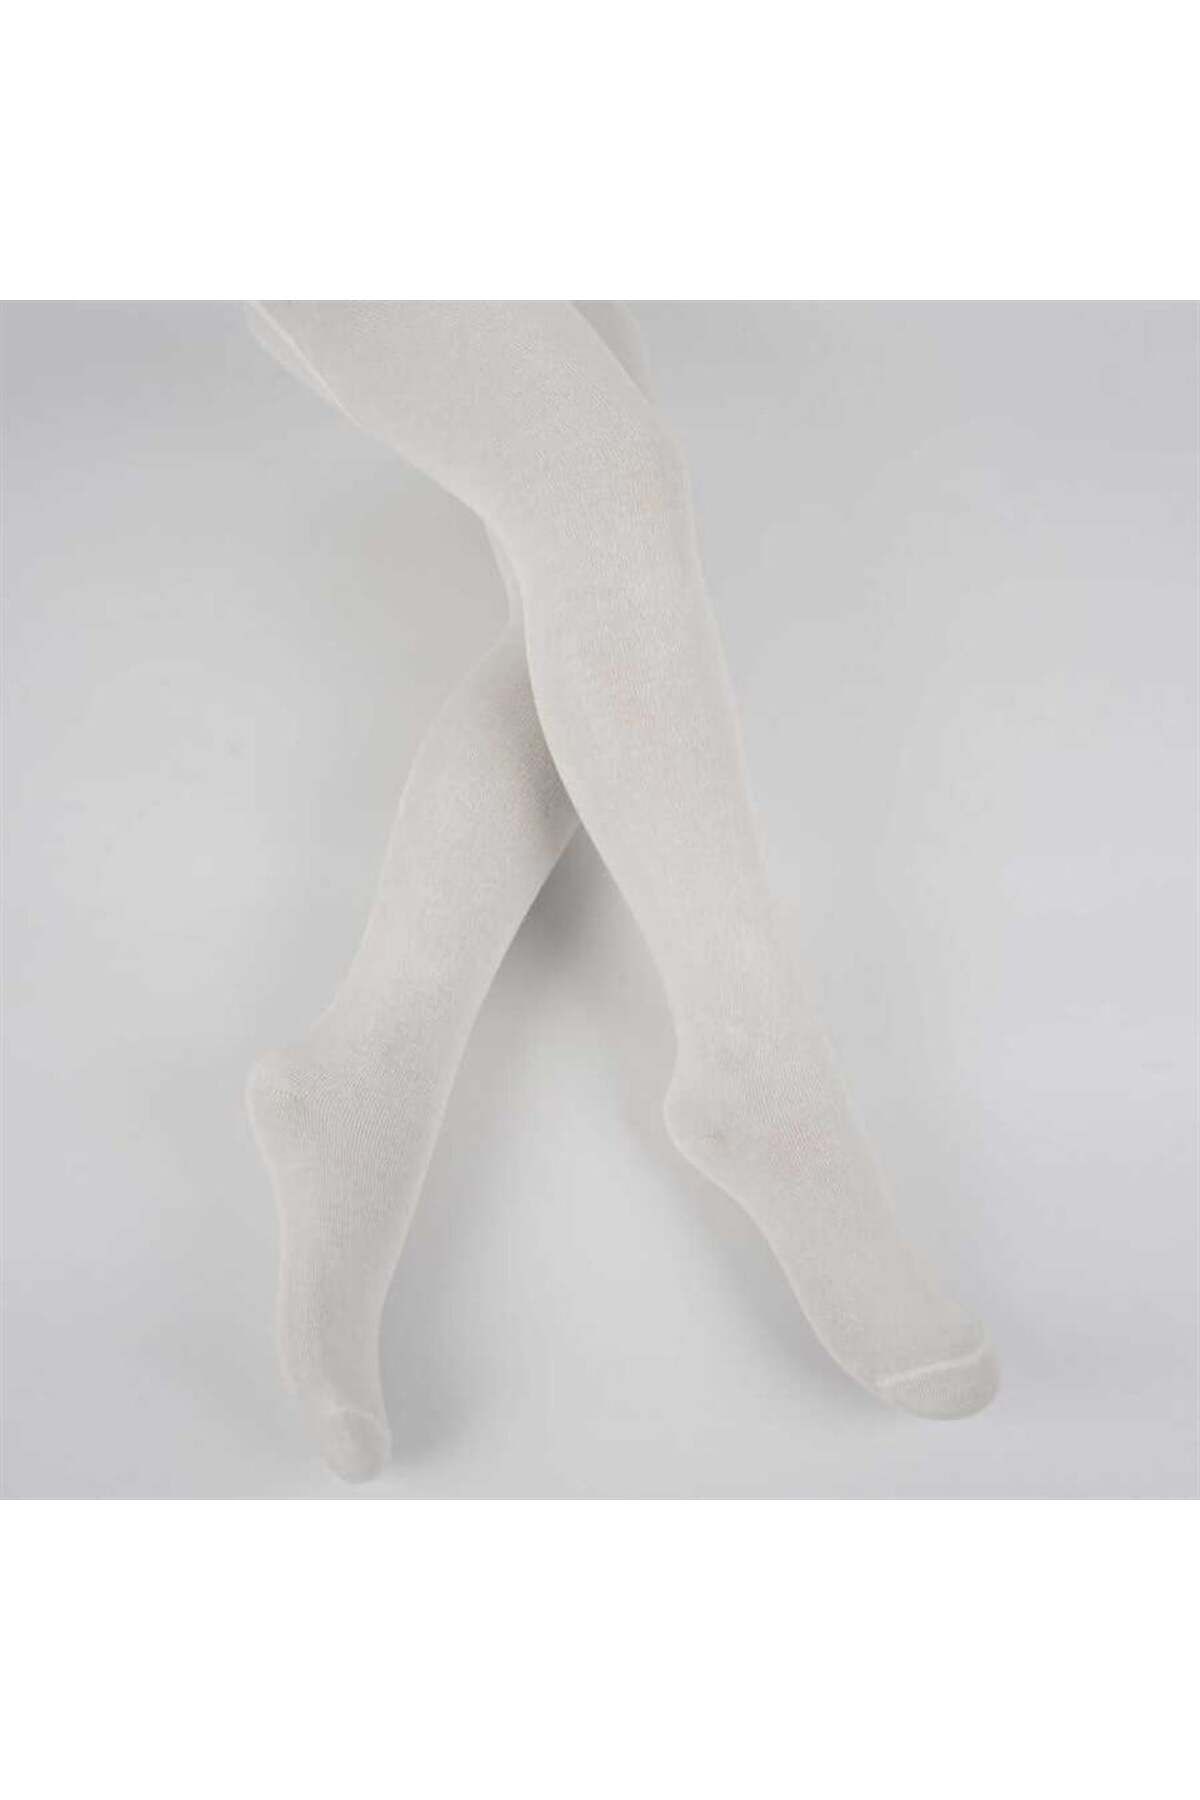 Katamino K36001 Artı Liva Bambu Külotlu Çorap 7.12 Yaş Ekru